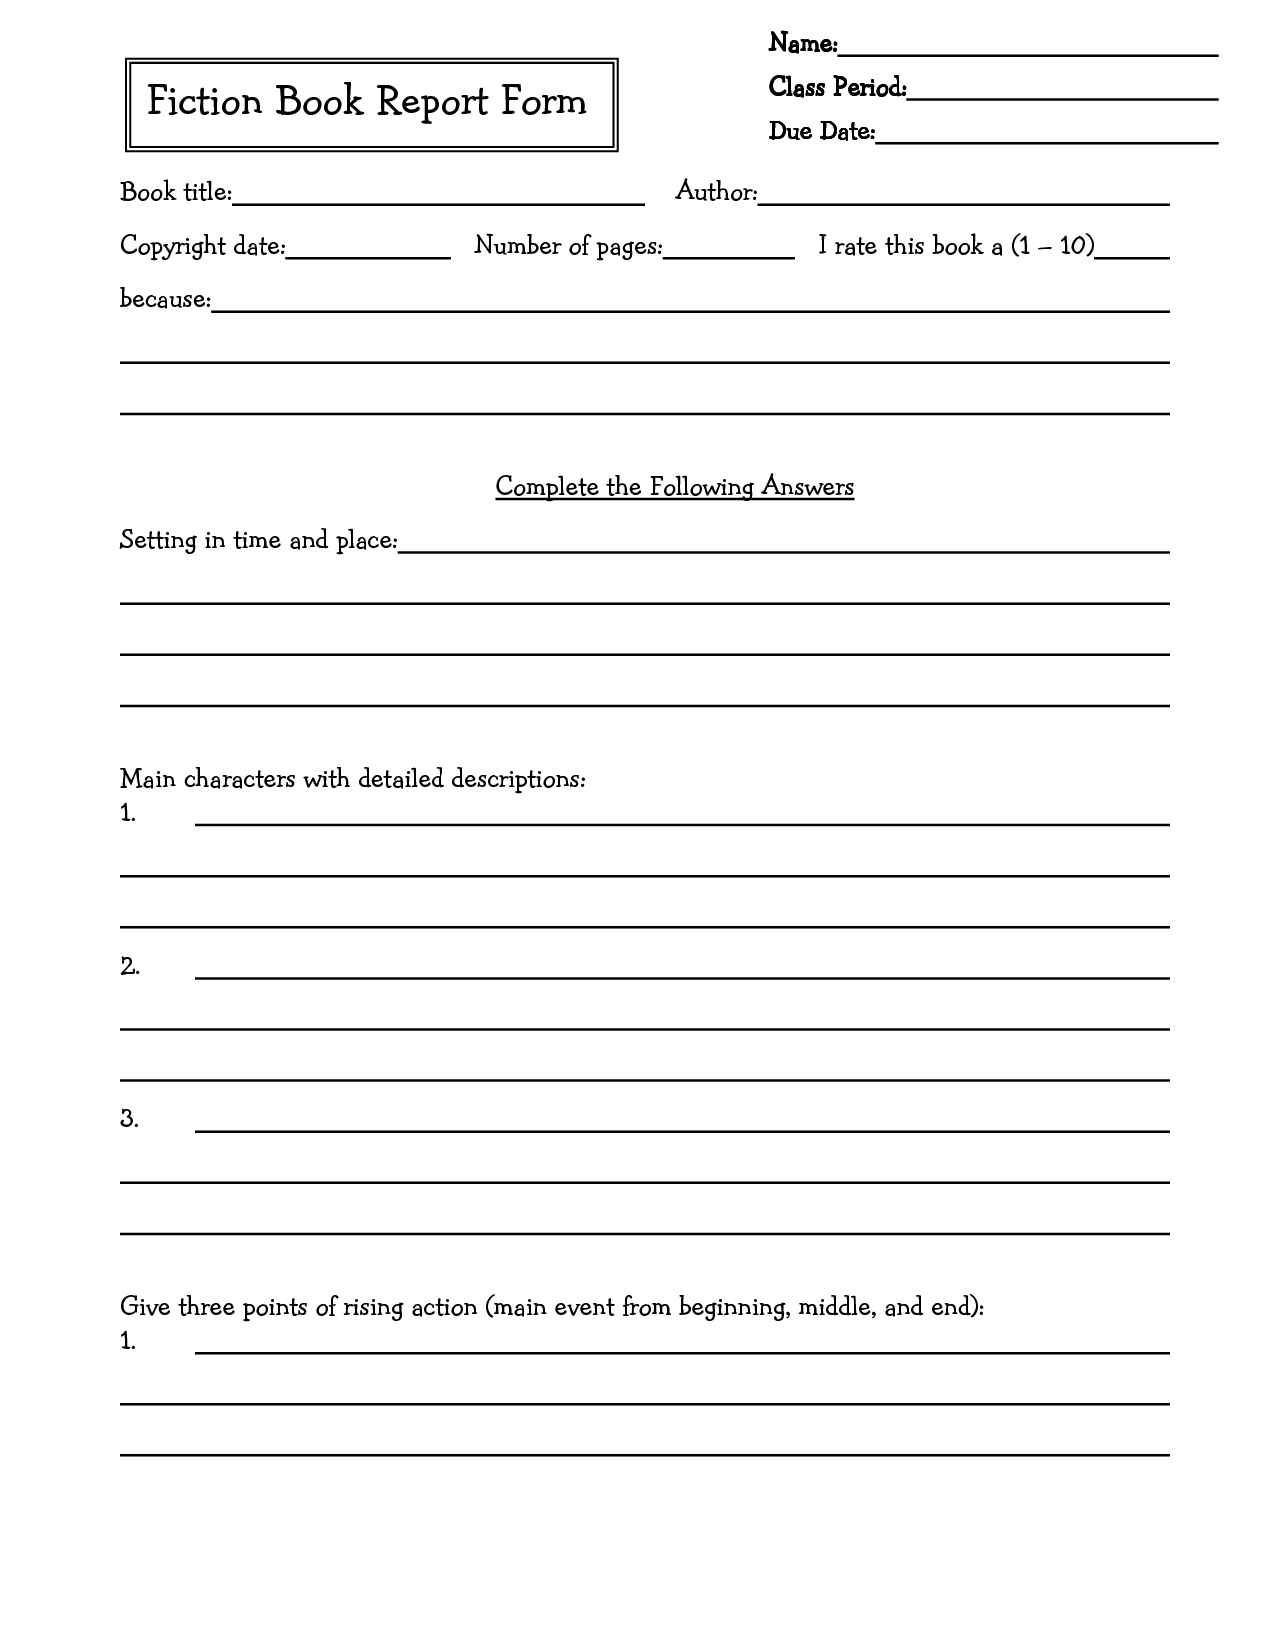 Middle School Book Report Brochure. 6Th Grade | 7Th Grade Within Book Report Template Middle School